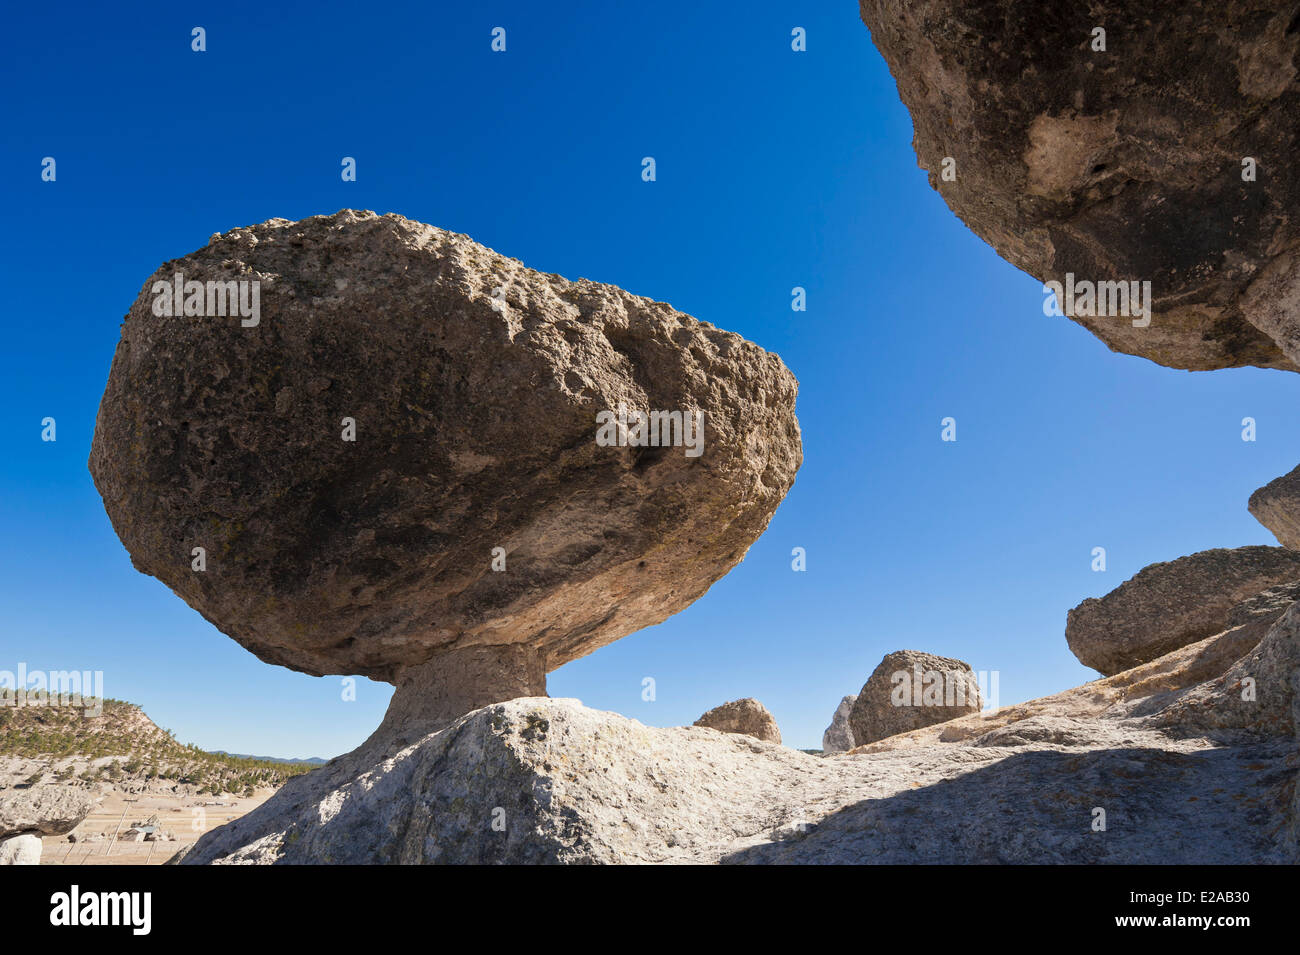 Mexico, Chihuahua state, rock formations in the Valley of las Ranas y los Hongos around Creel Stock Photo